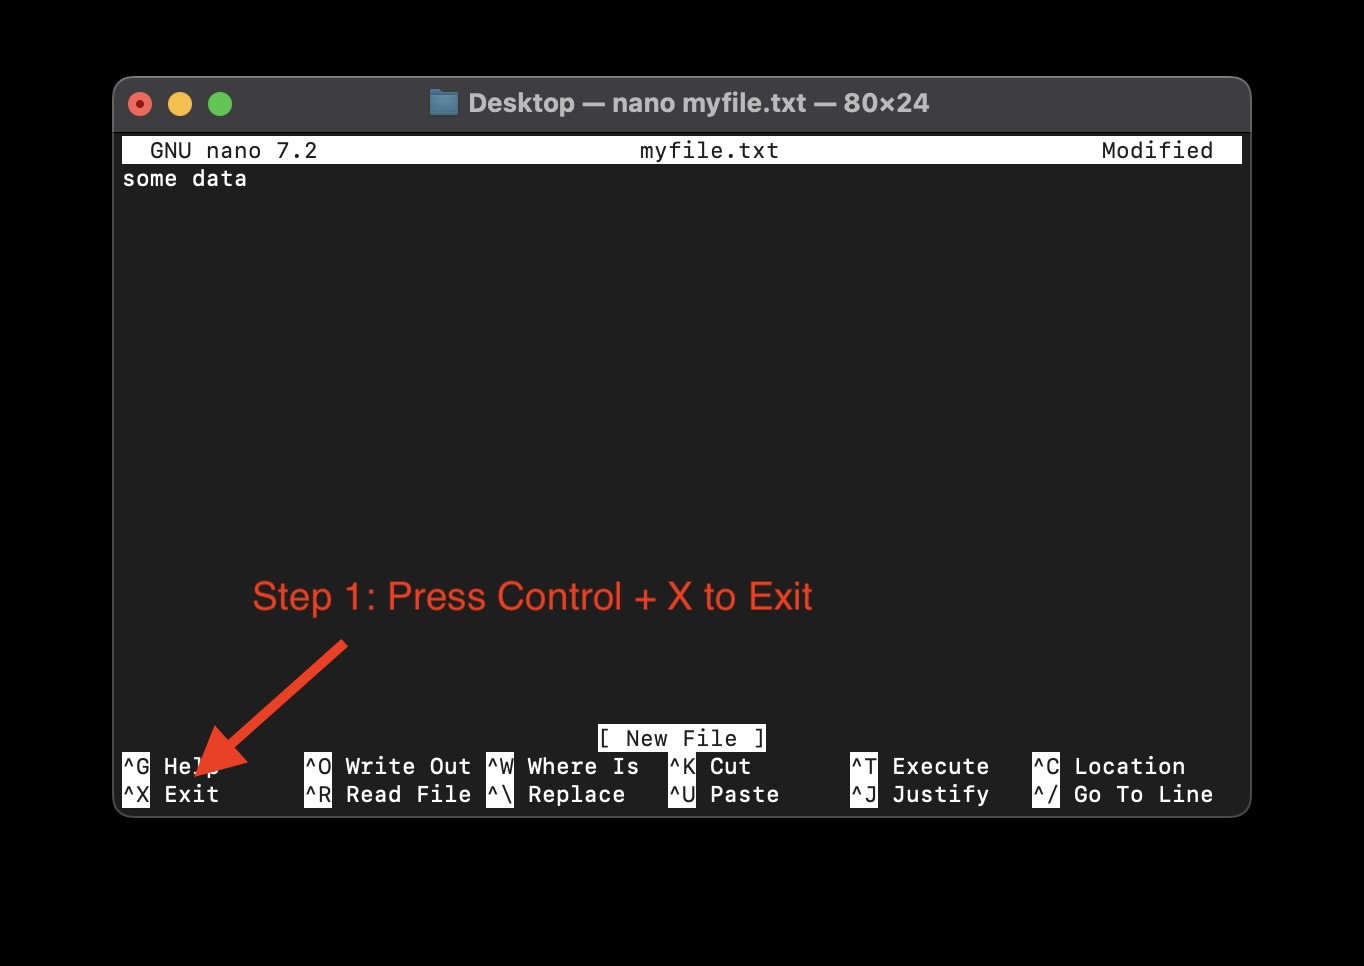 Step 1 - Press Control + X to Exit Nano